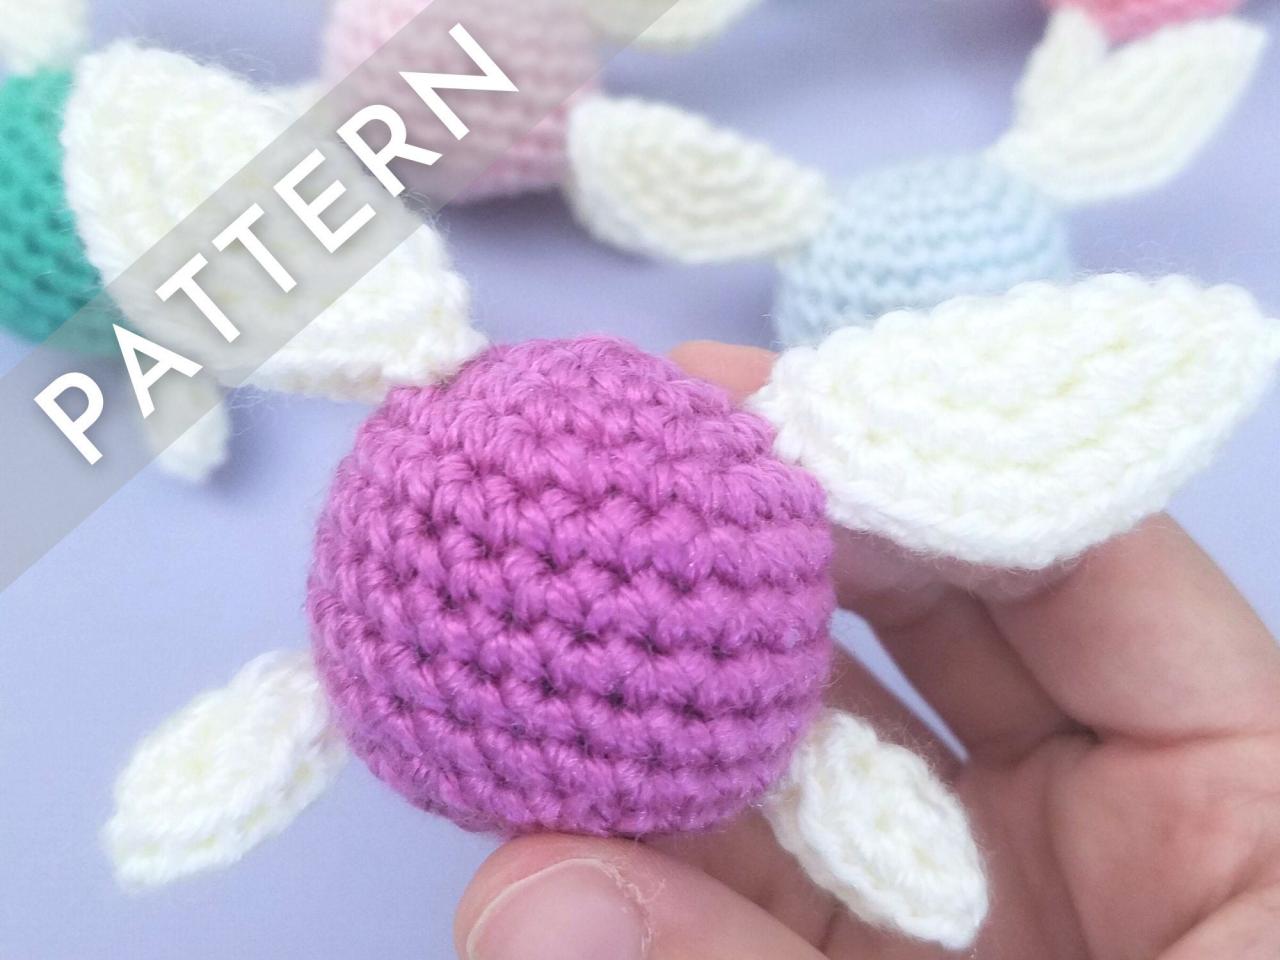 Crochet Fairy PATTERN - crochet PDF pattern - cute fairy amigurumi - easy and quick to make - beginner friendly